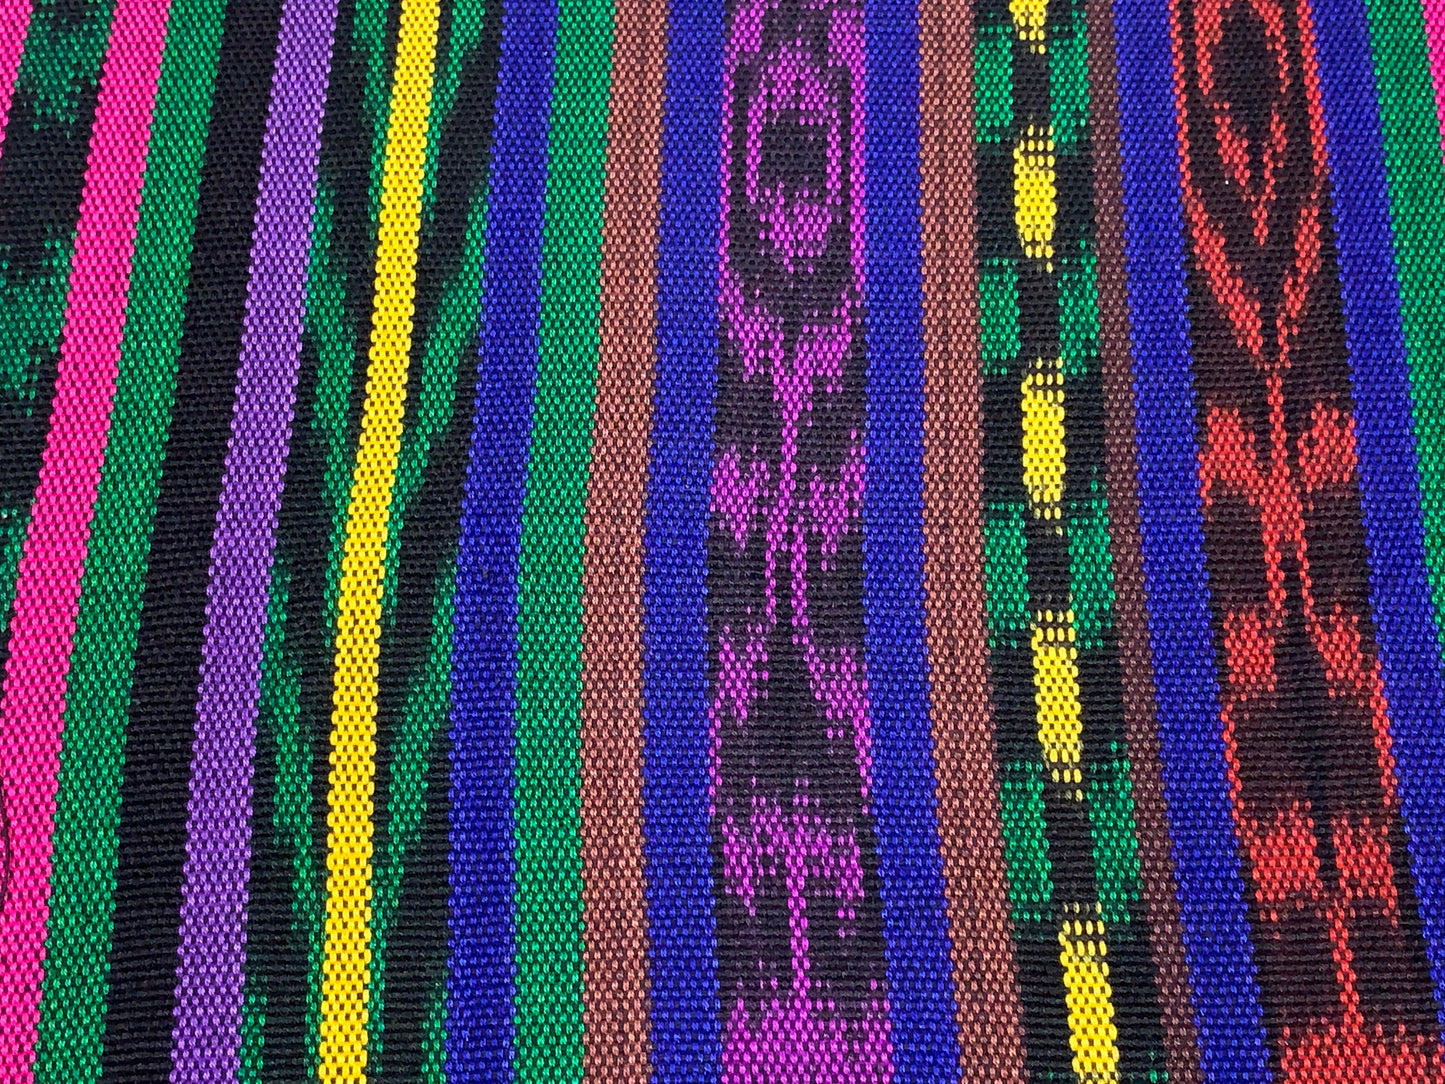 Guatemalan Handwoven Ikat Purple & Primary Colors